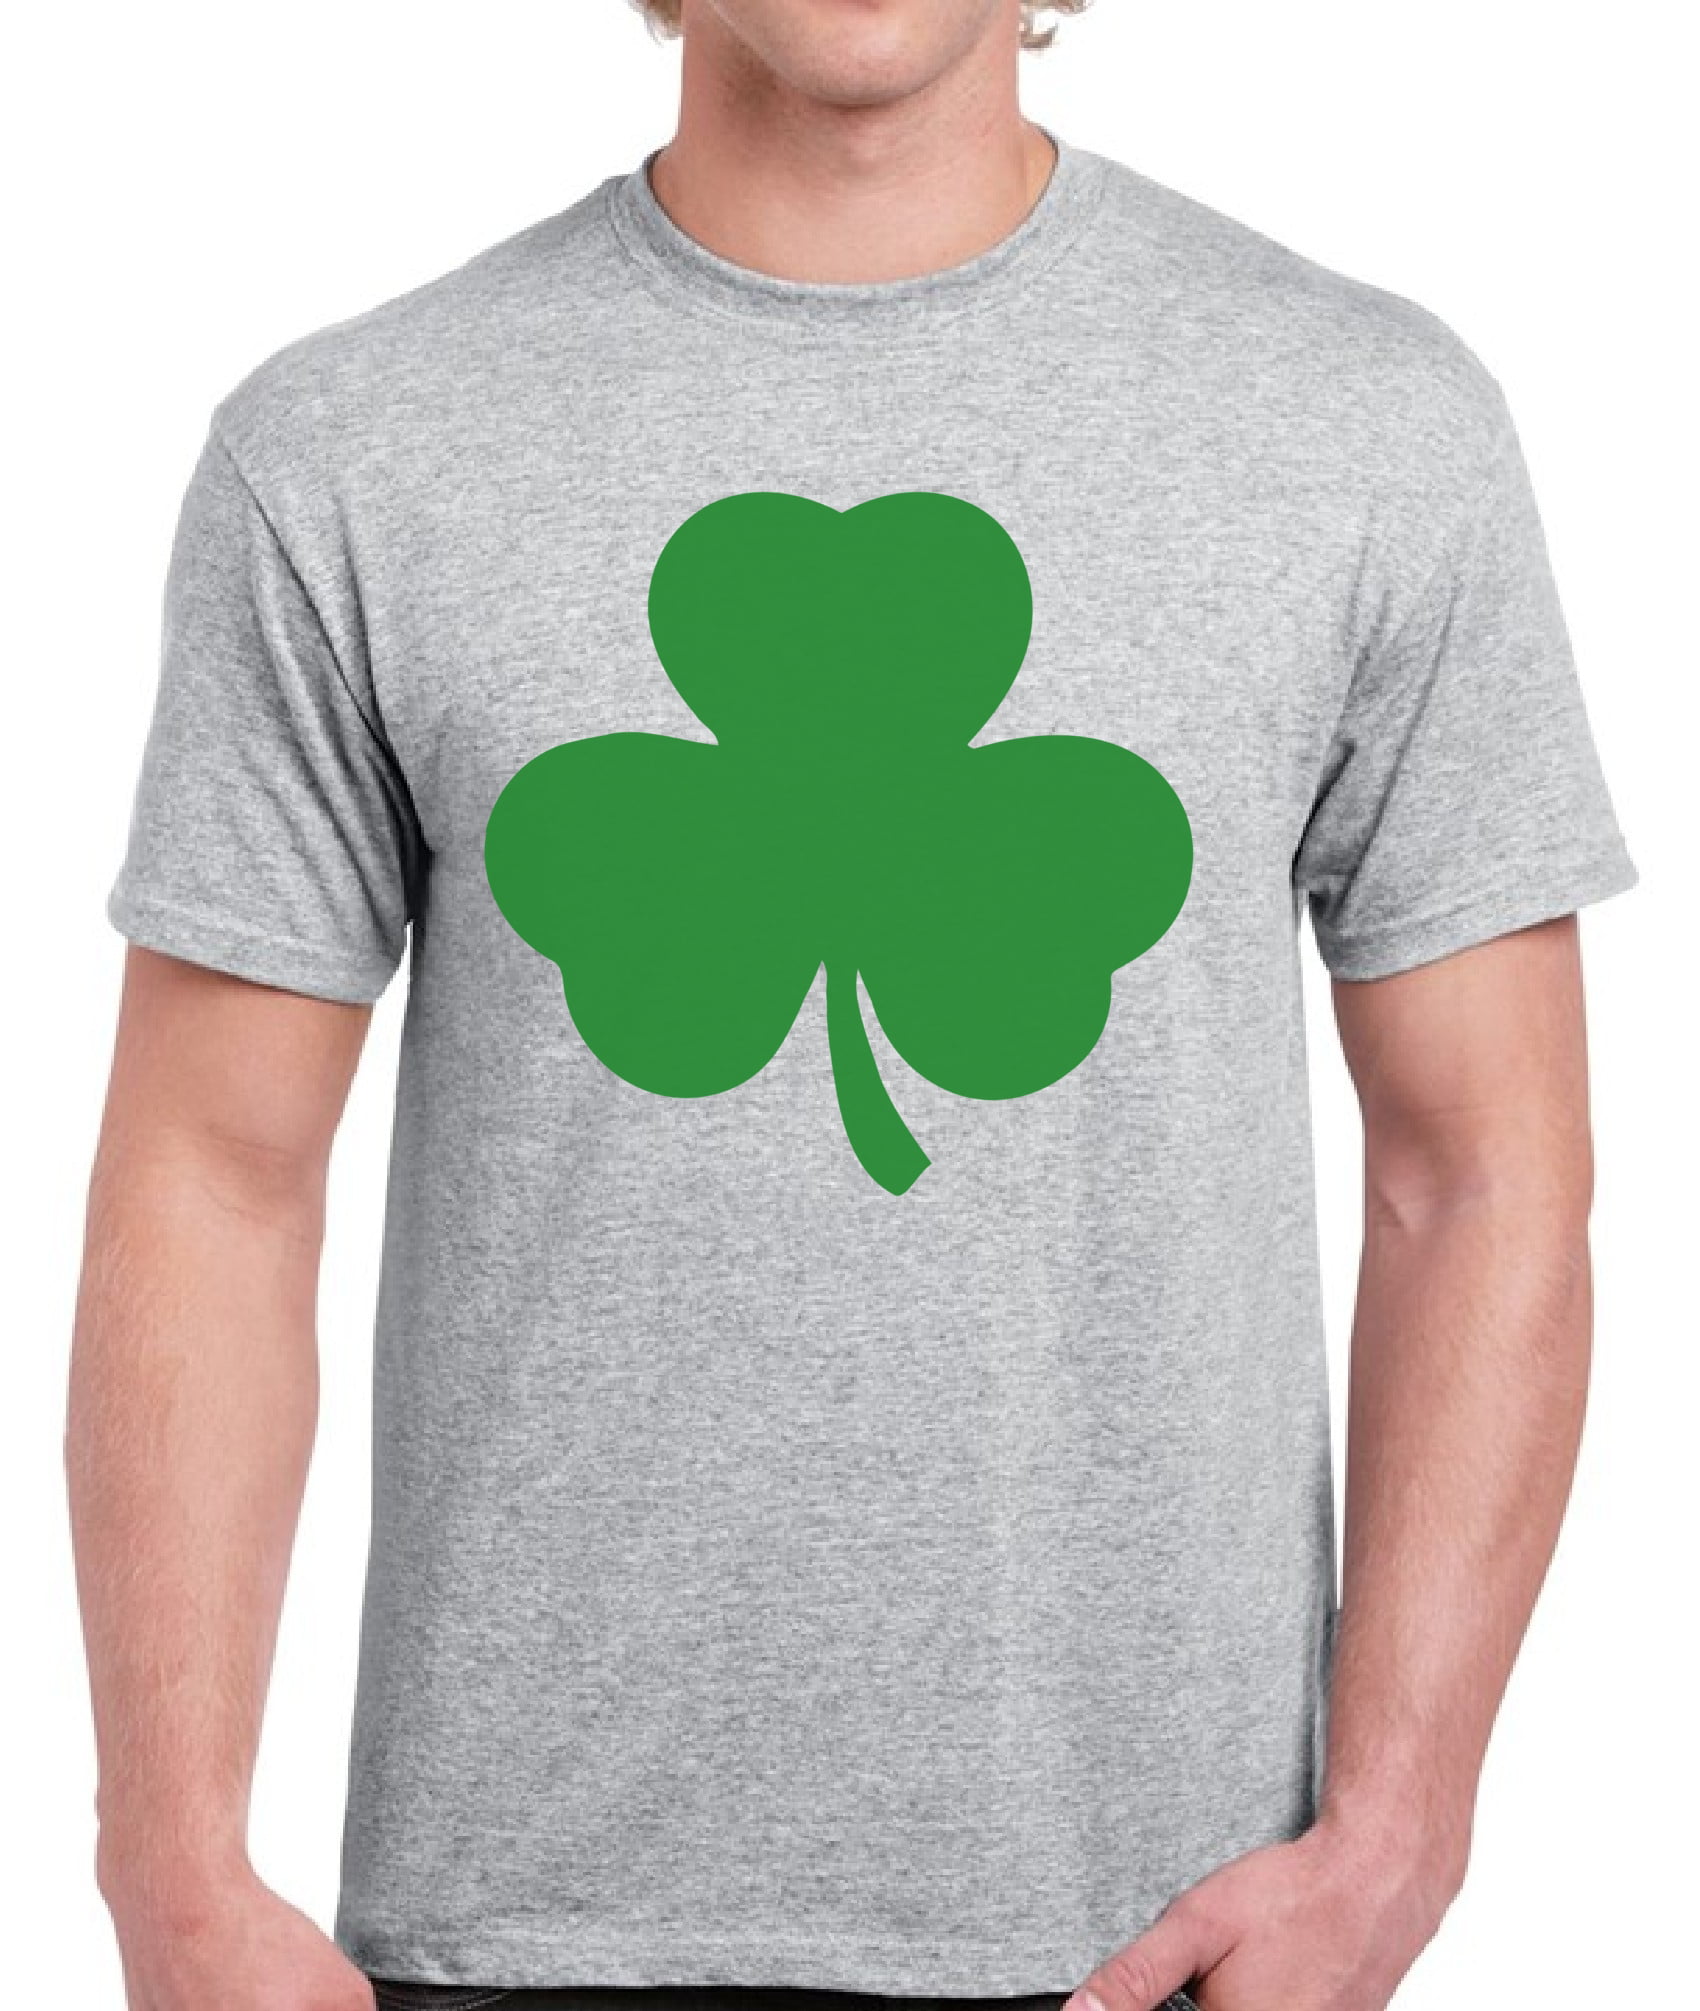 6 Color Options Flag of Ireland Shamrock T-Shirt Unisex Original Faded Design